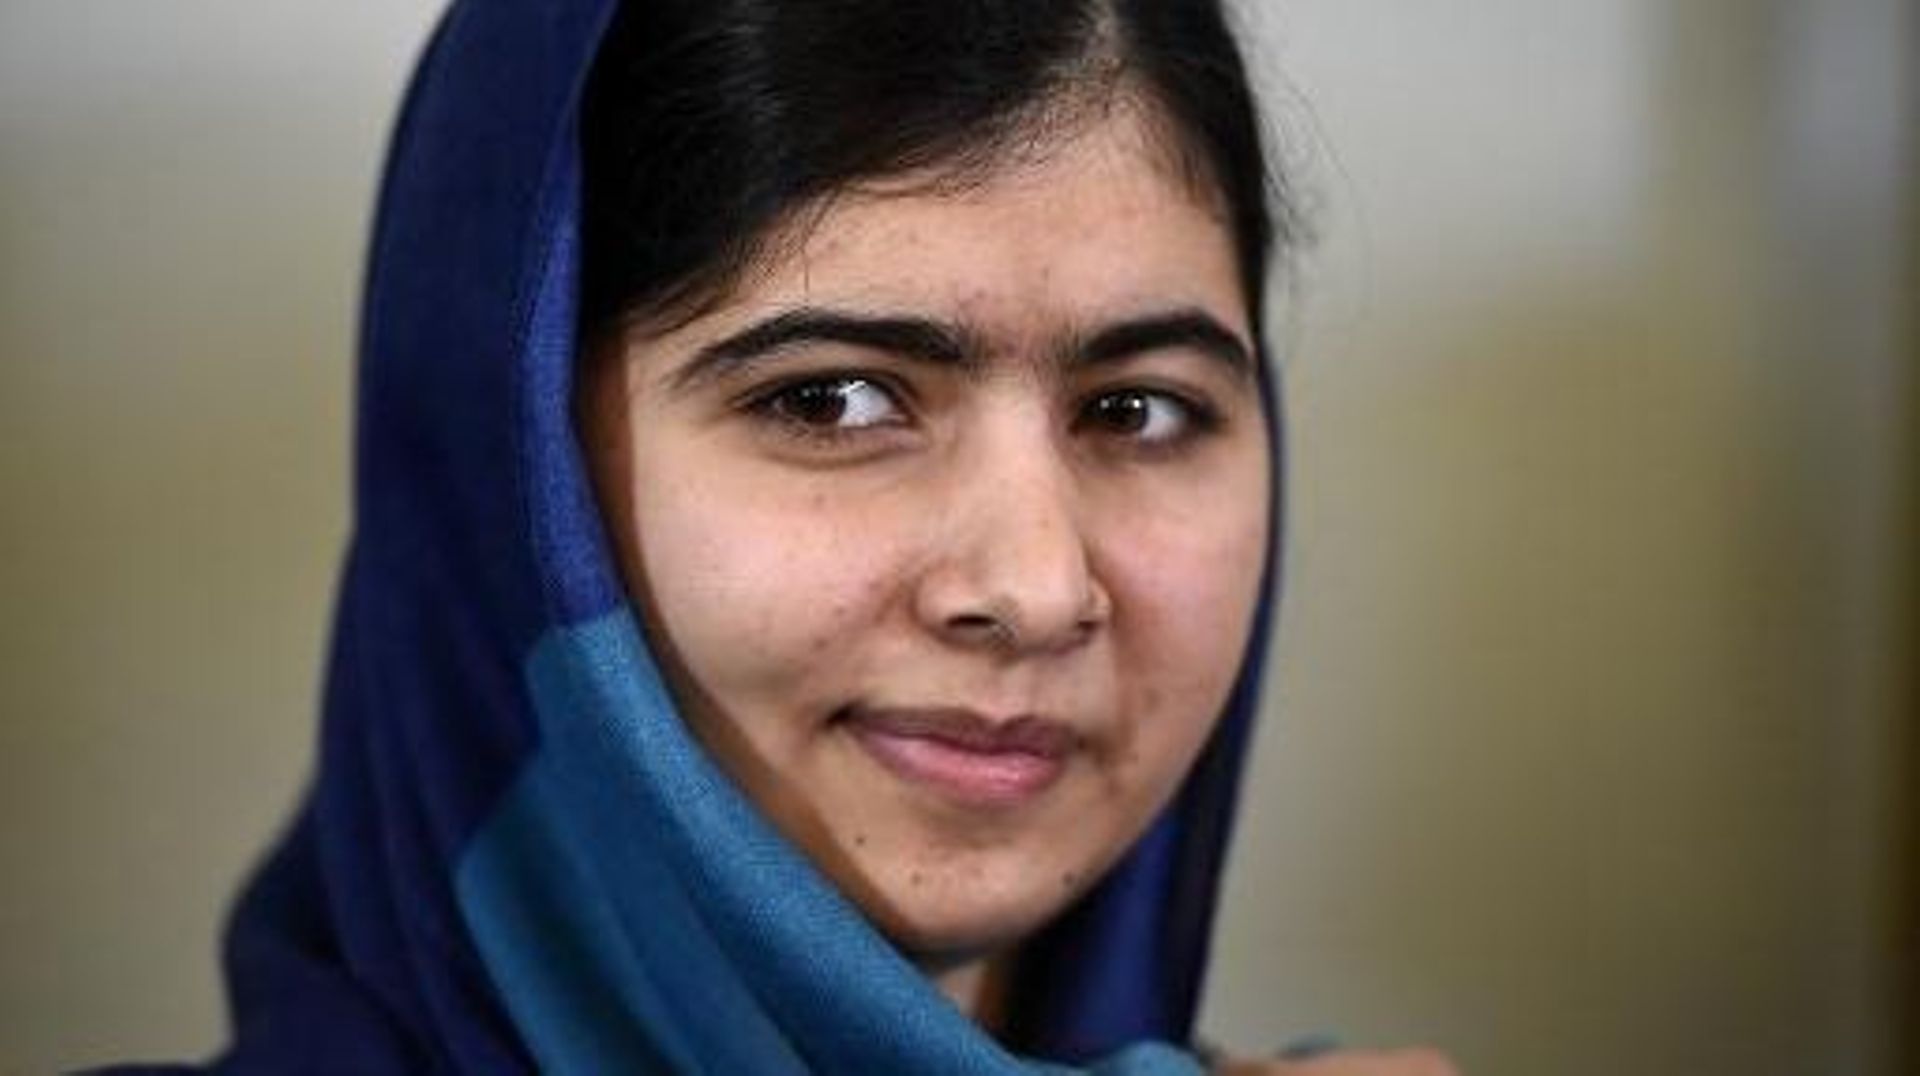 Malala Yousafzai, prix Nobel de la paix, le 9 décembre 2014 à Oslo